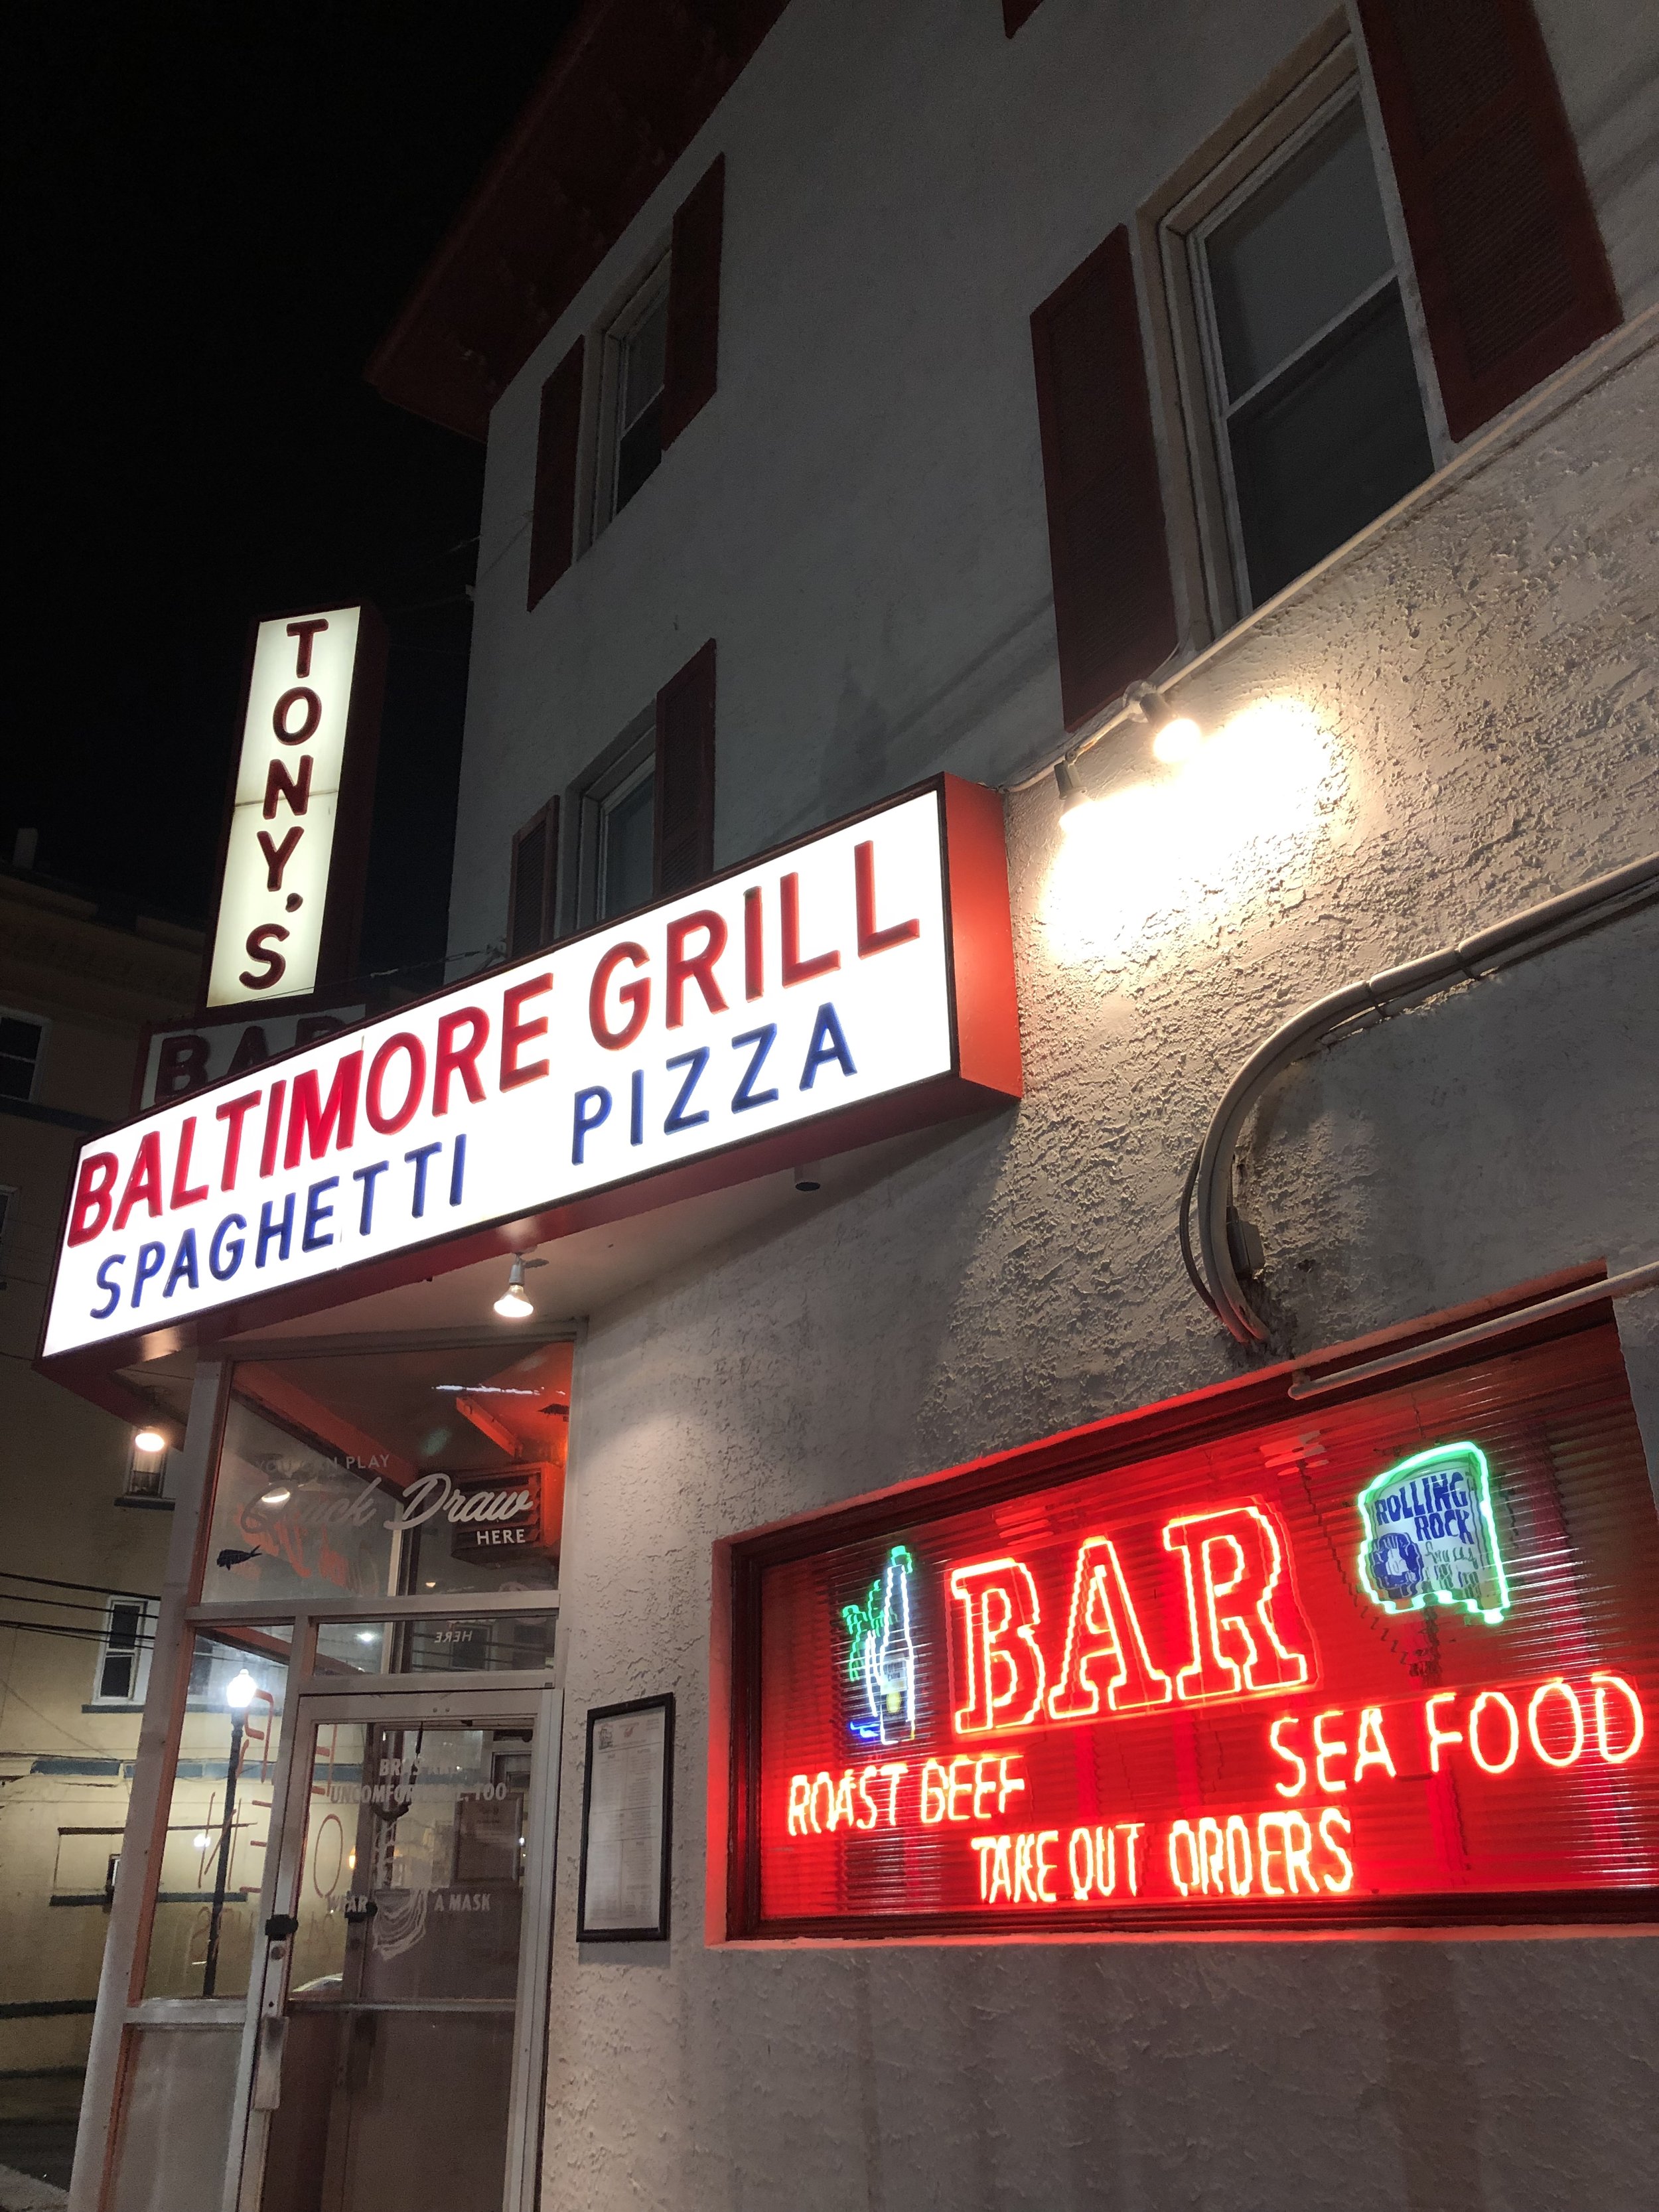 Tony's Baltimore Grill